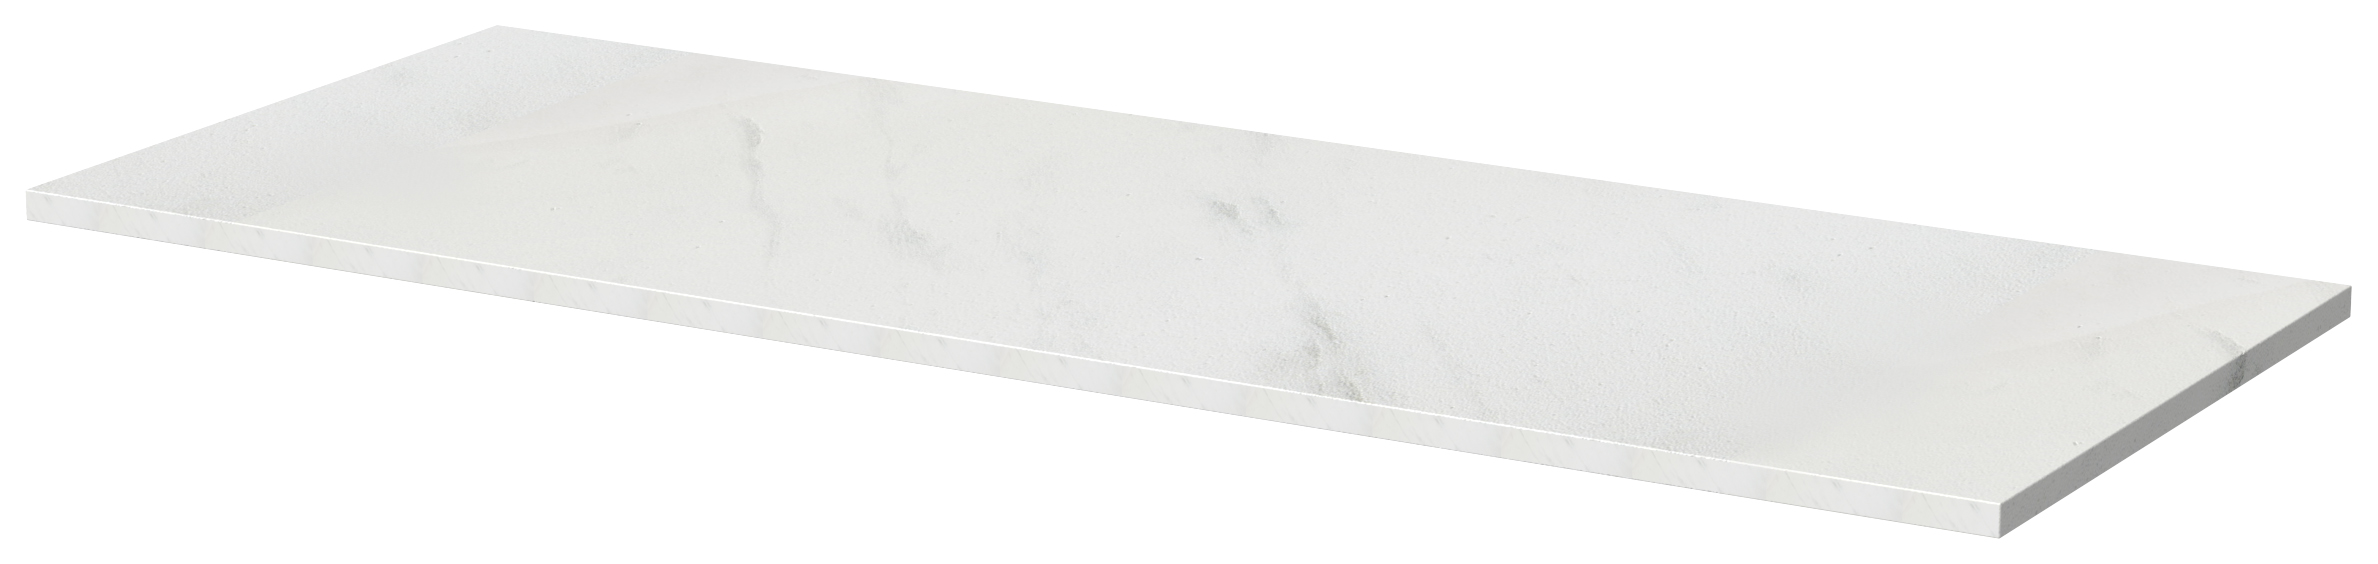 Wickes Tallinn White Marble Worktop - 465 x 1310 x 18mm